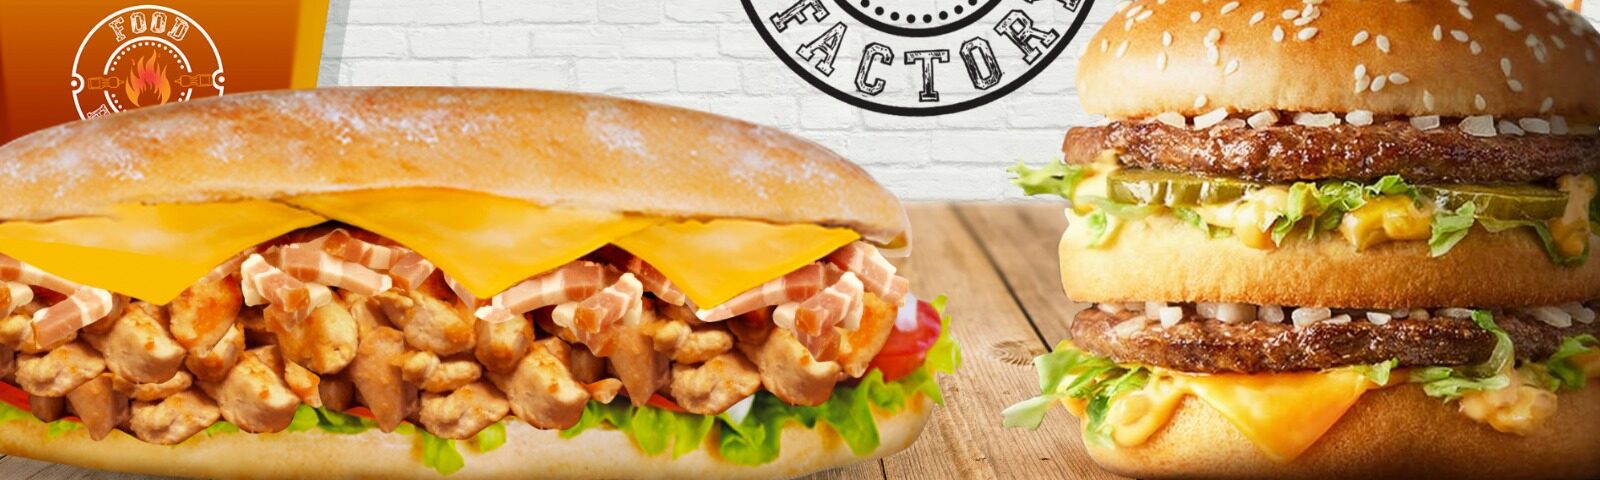 Food Factory Elbeuf | Burgers - Kebab - Sandwiches - Tacos - Desserts